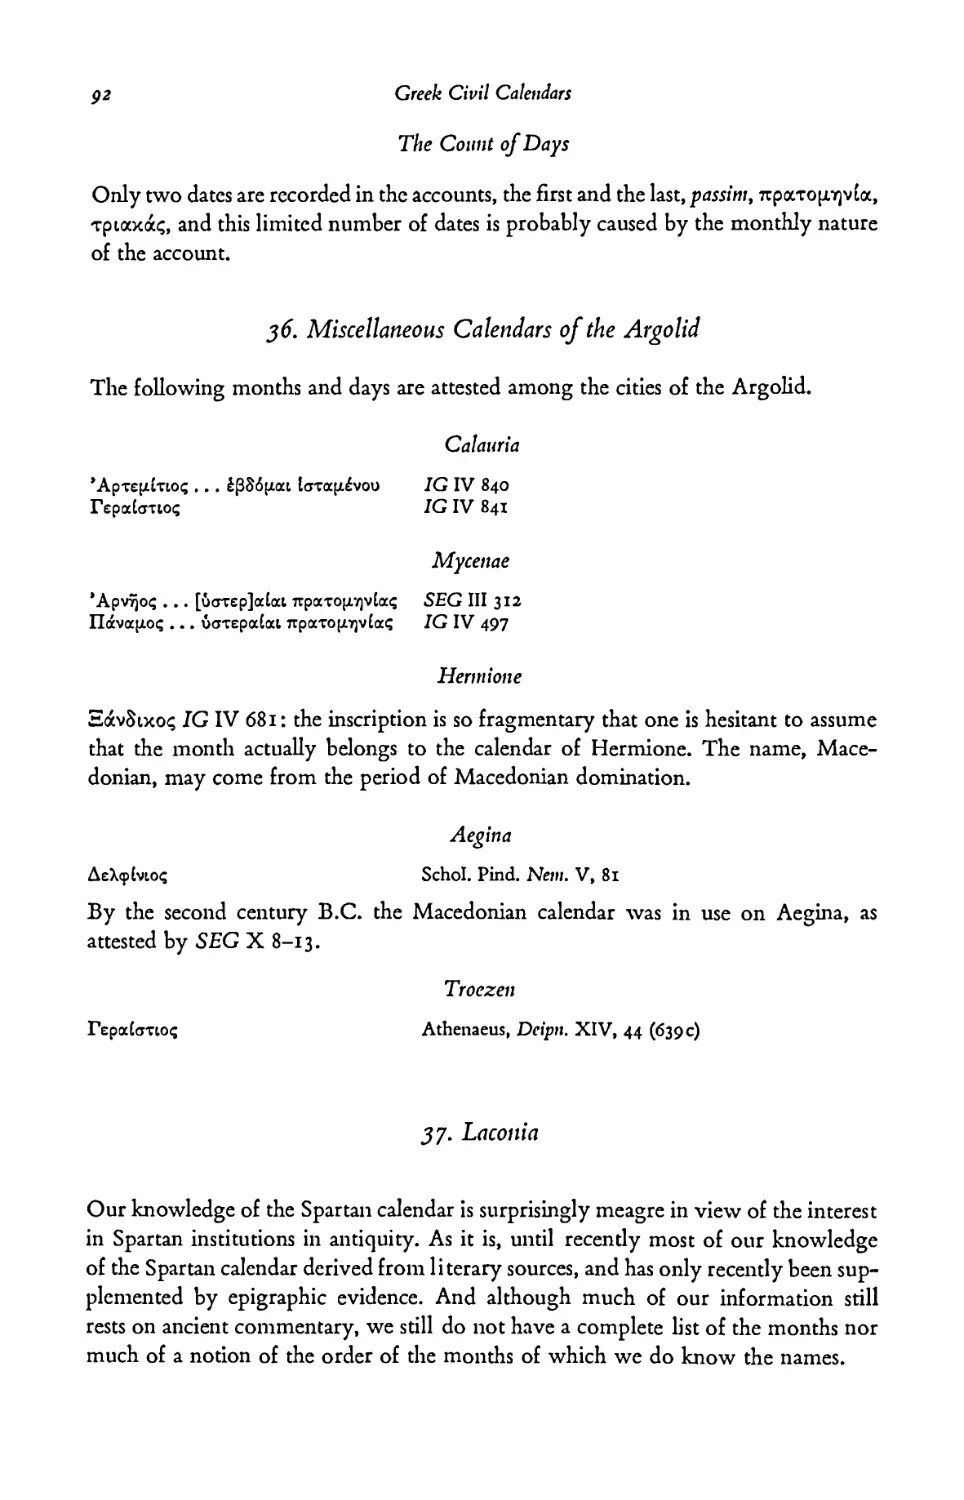 - The Count of Days
36. Miscellaneous Calendars of the Argolid
- Mycenae
- Hermione
- Aegina
- Troezen
37. Laconia